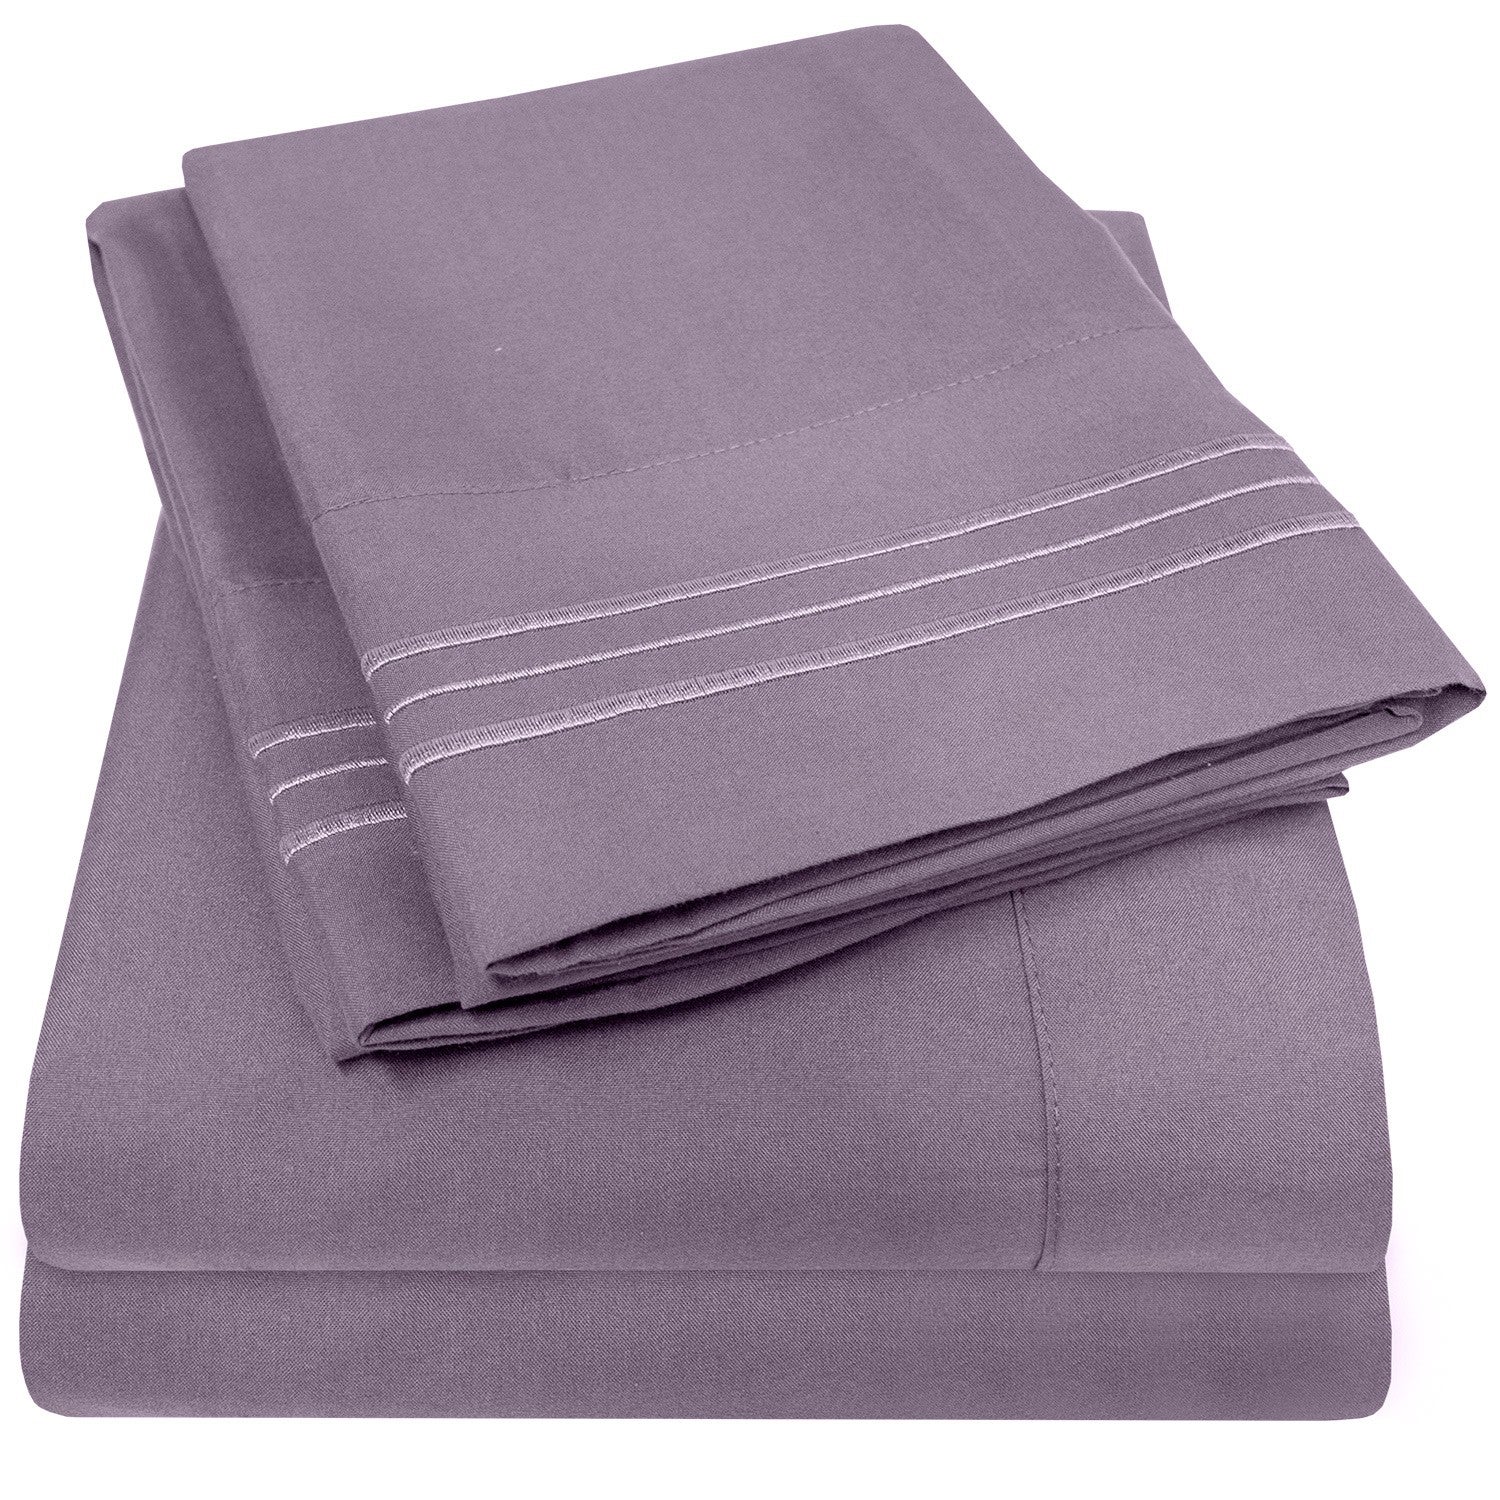 Classic 4-Piece Bed Sheet Set (Plum) - Folded